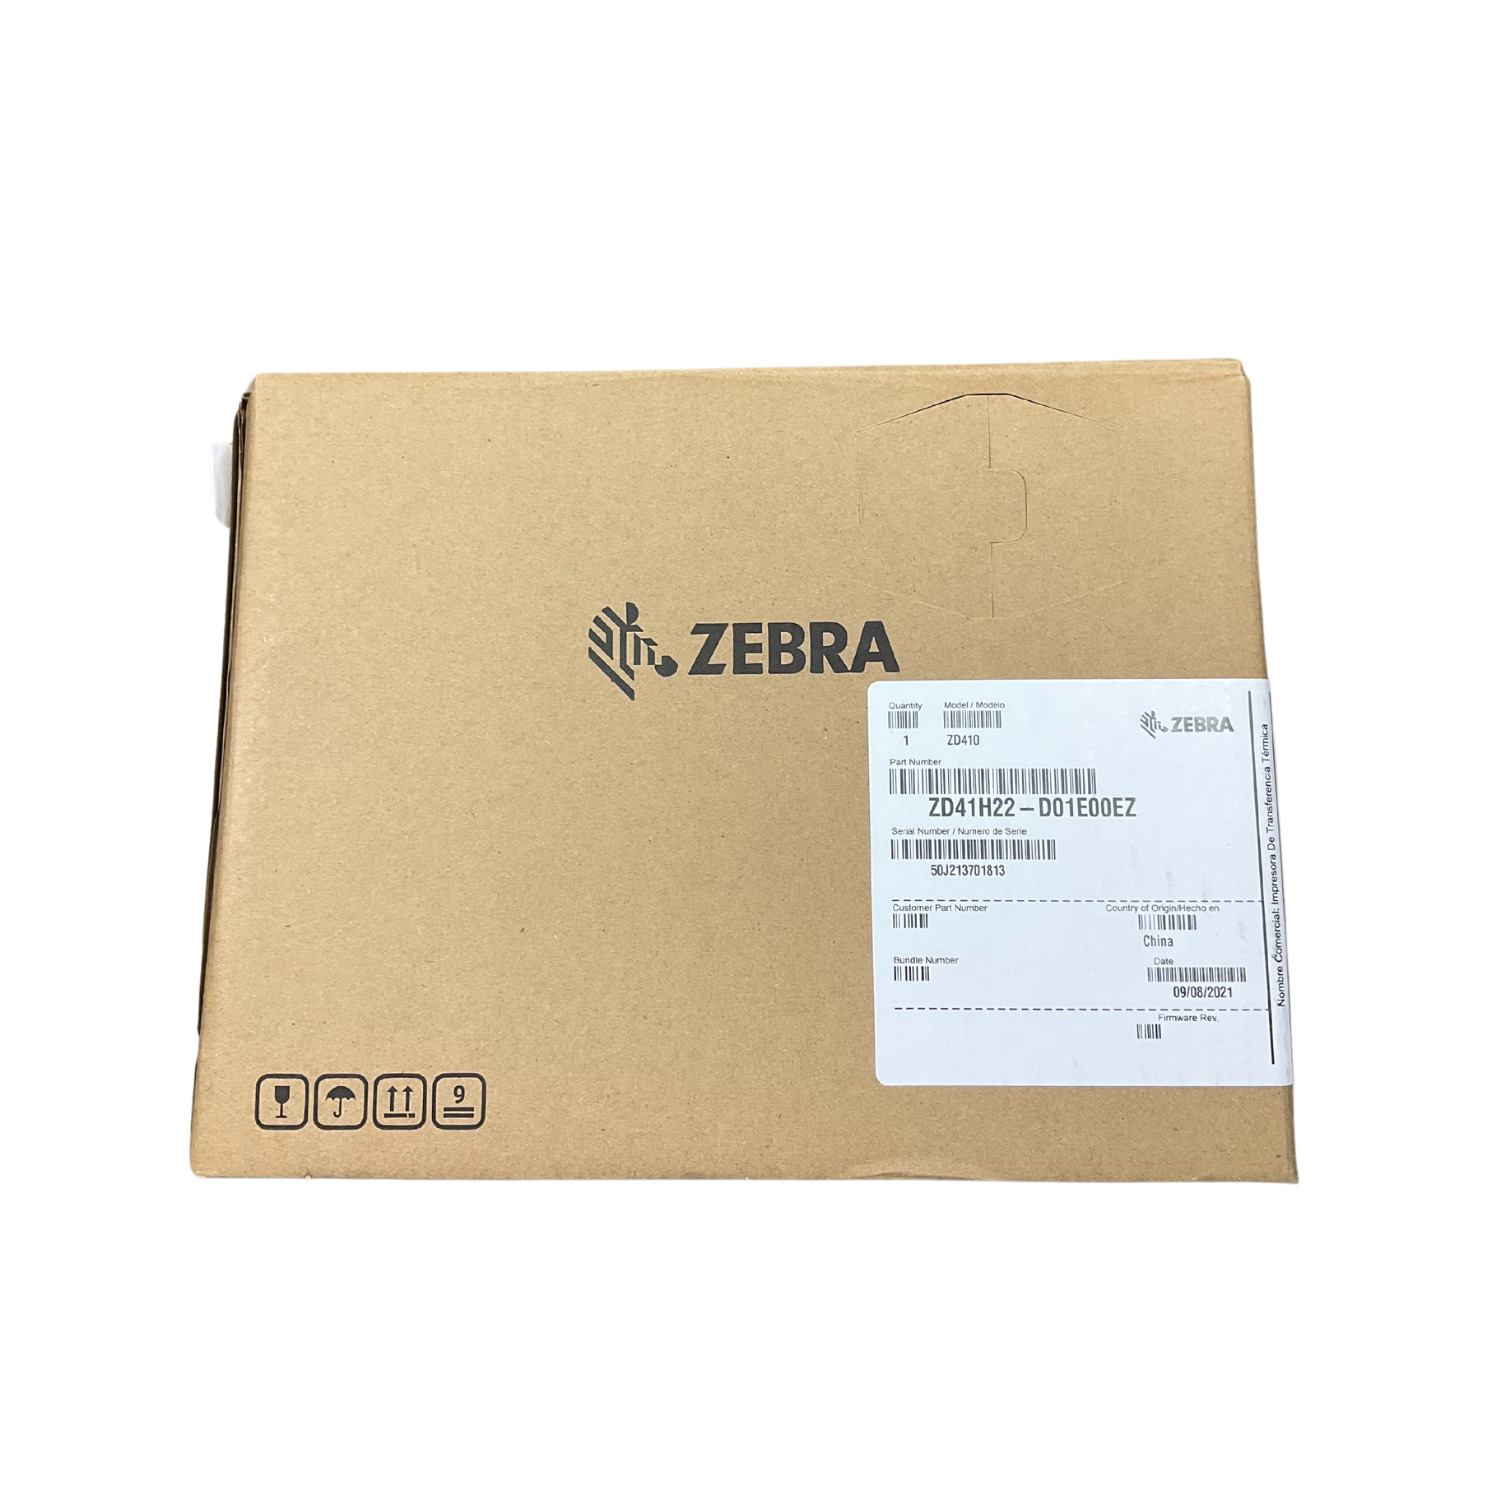 NEW IN BOX Zebra ZD410 Direct Thermal HC Ethernet 203dpi Part#: ZD41H22-D01E00EZ